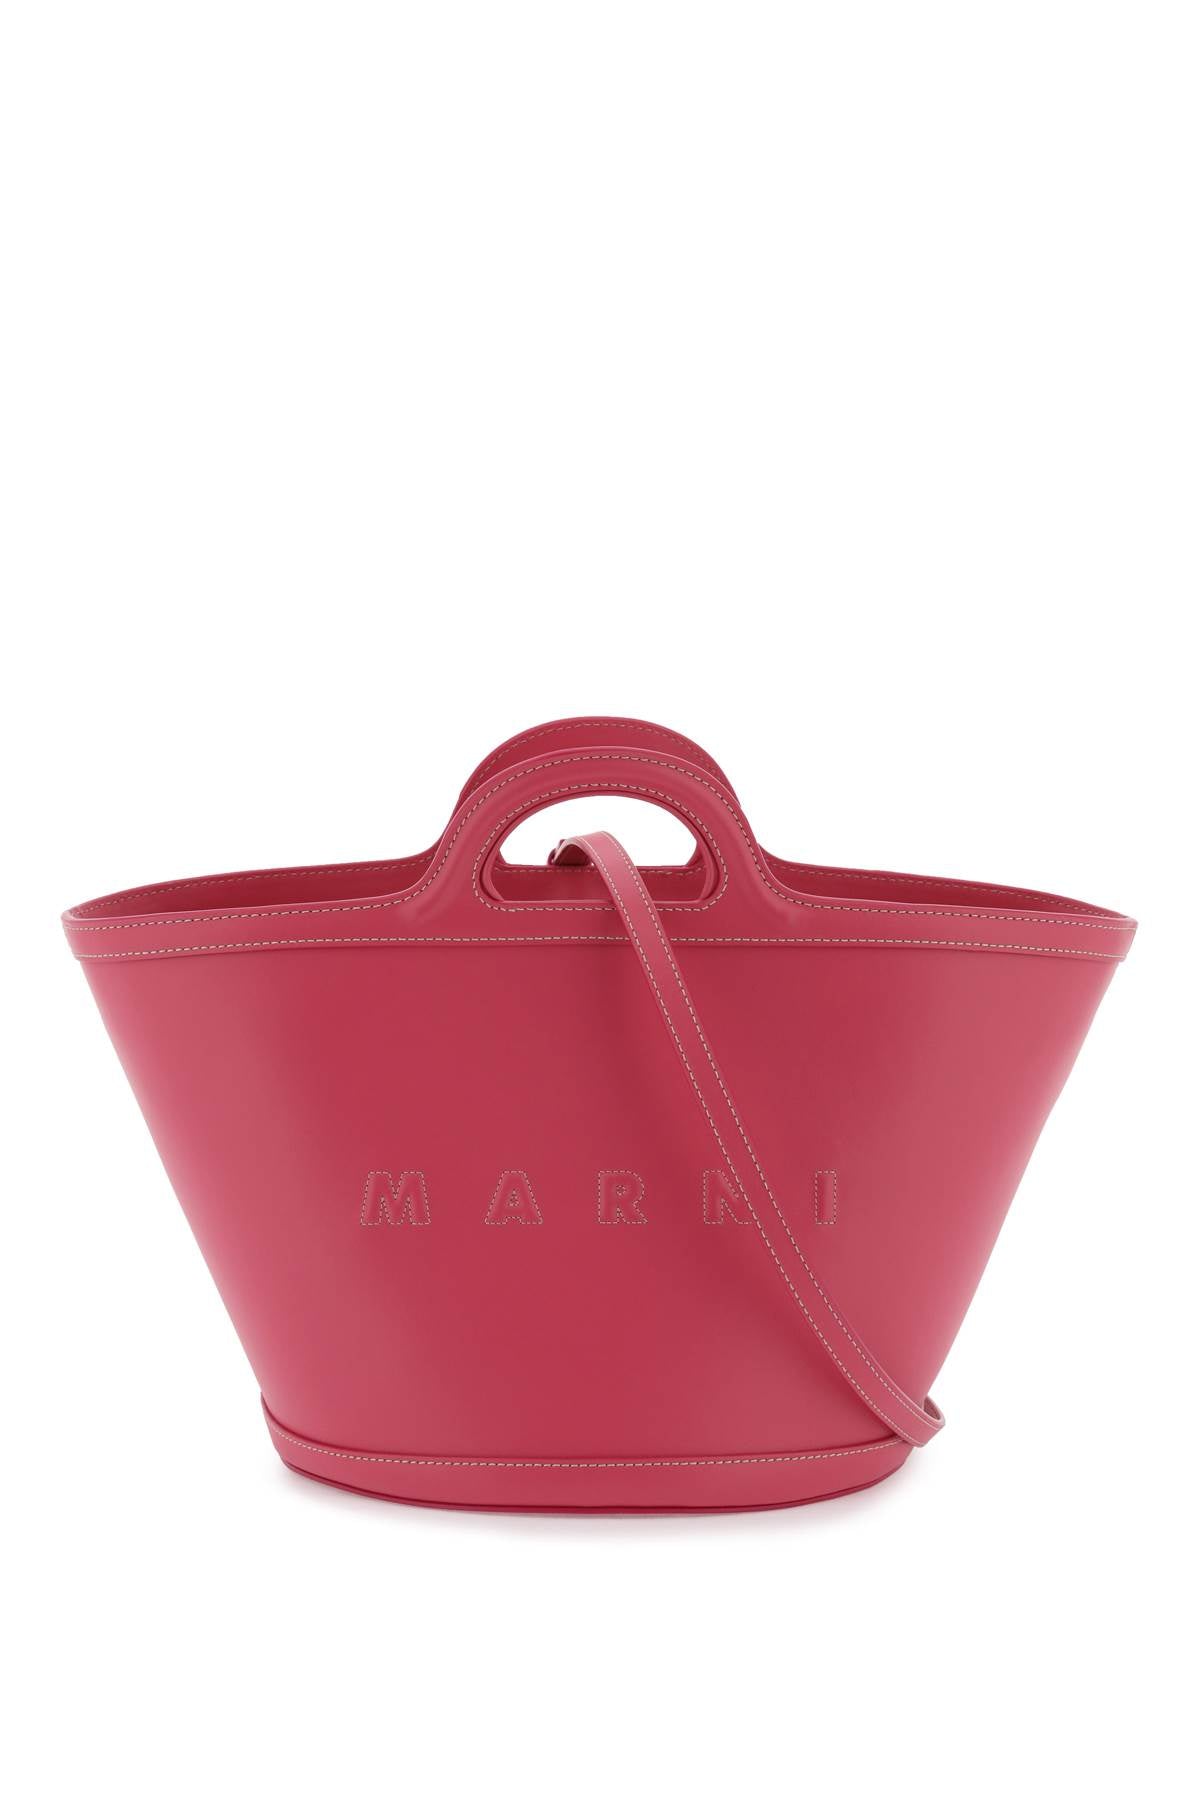 MARNI Pink Leather Mini Tropicalia Bucket Handbag with Gold Hardware and Adjustable Strap